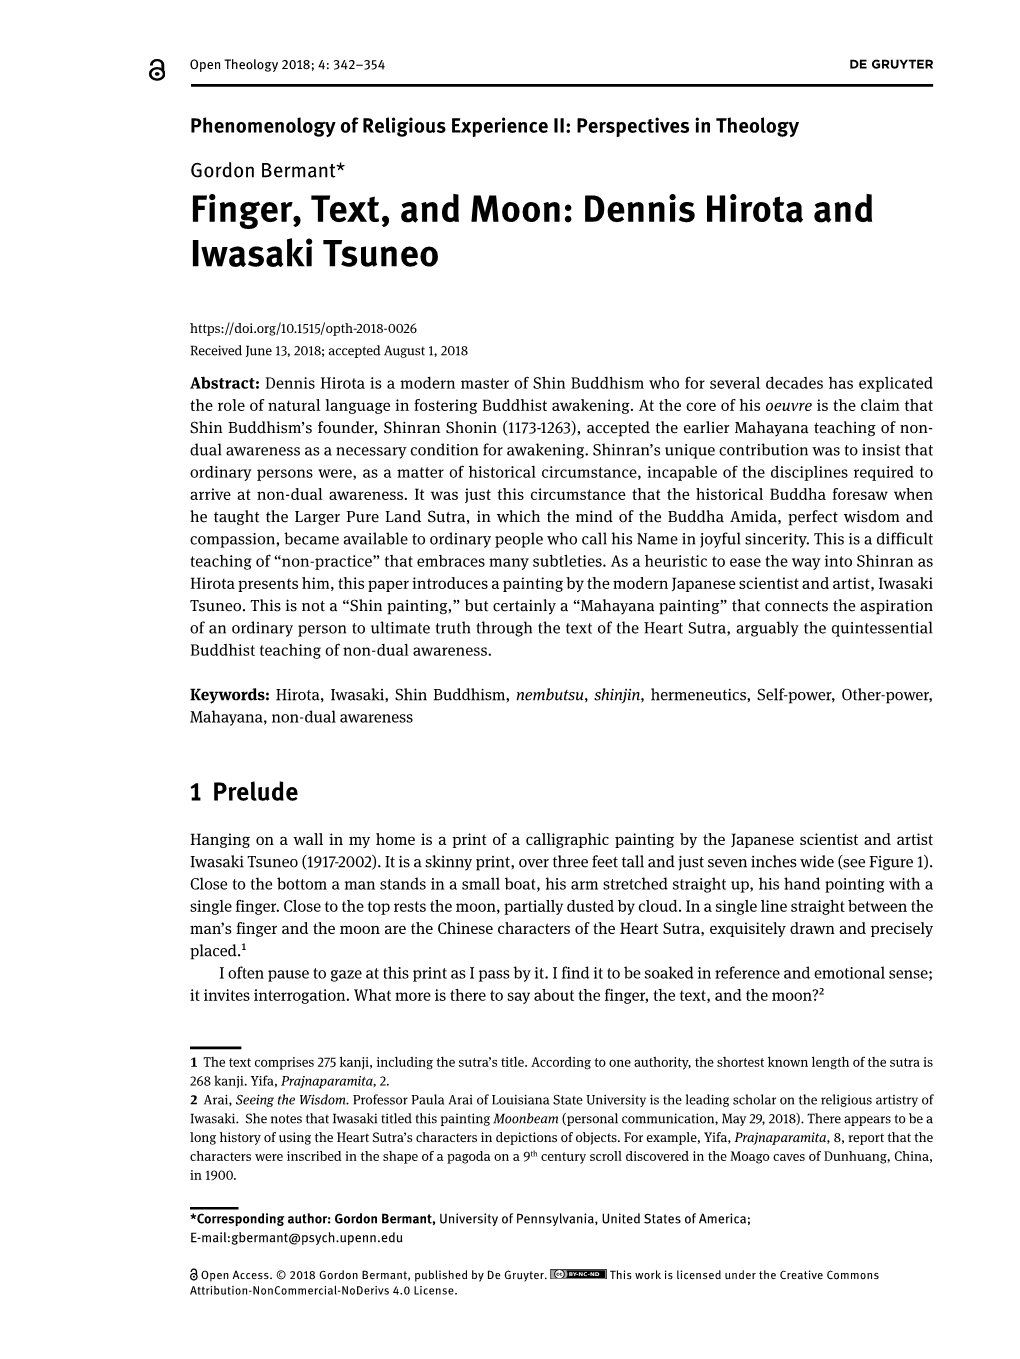 Finger, Text, and Moon: Dennis Hirota and Iwasaki Tsuneo